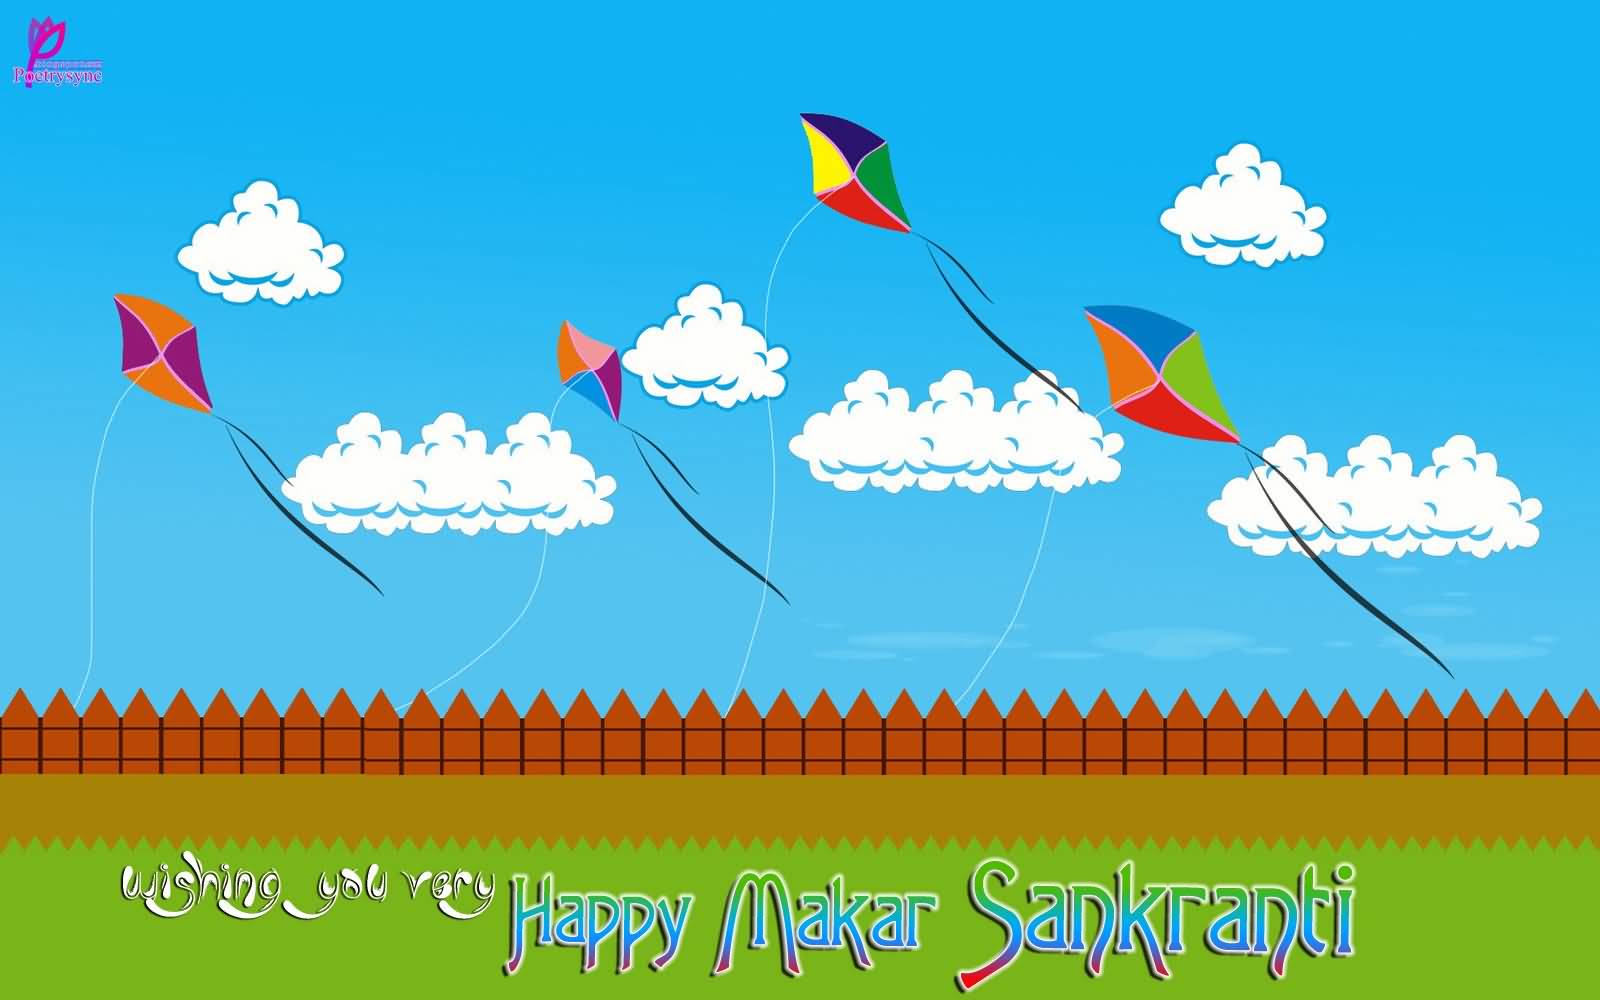 Happy Makar Sankranti Kites In The Sky Cartoon Picture